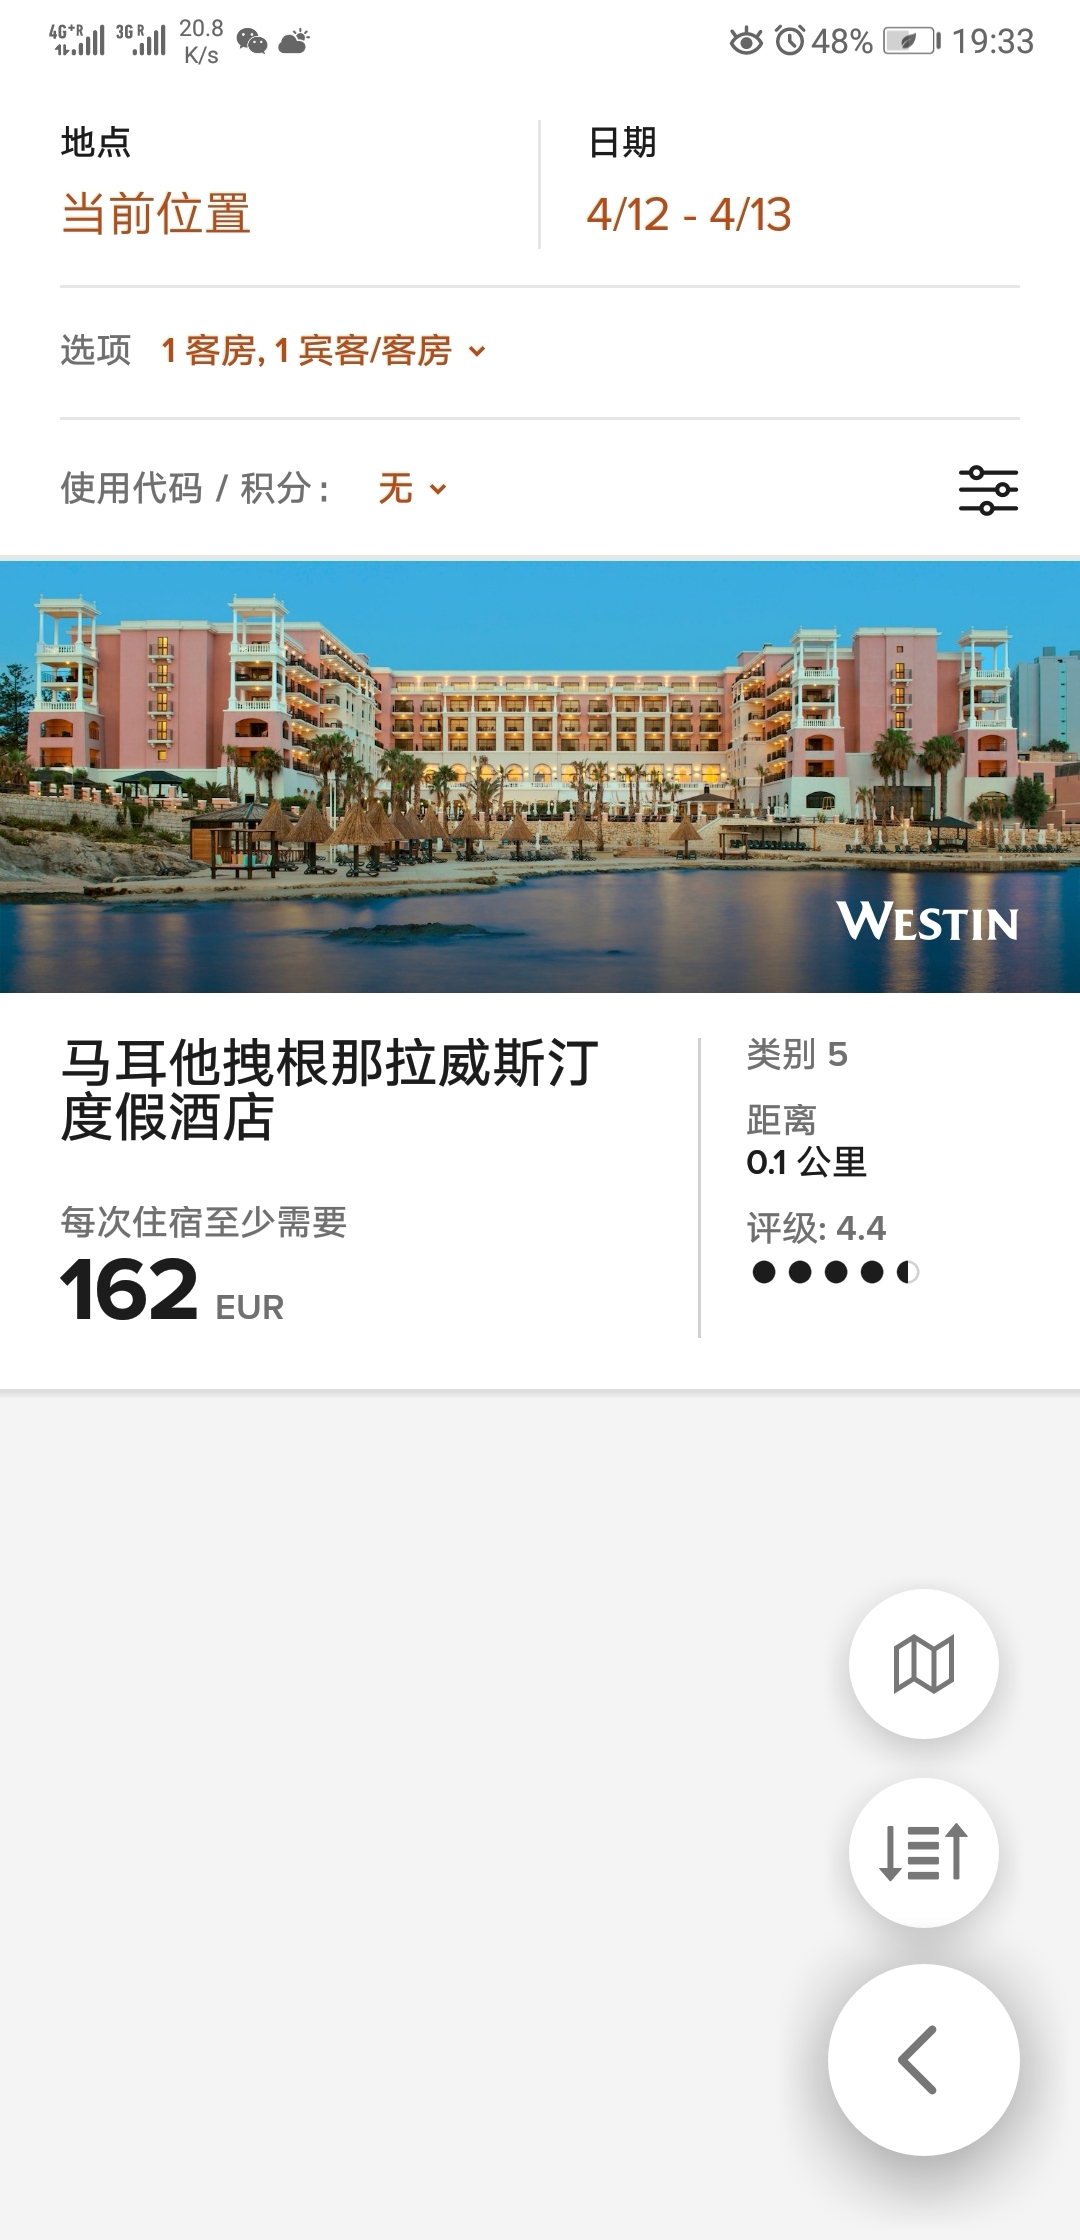 westin resort ¥